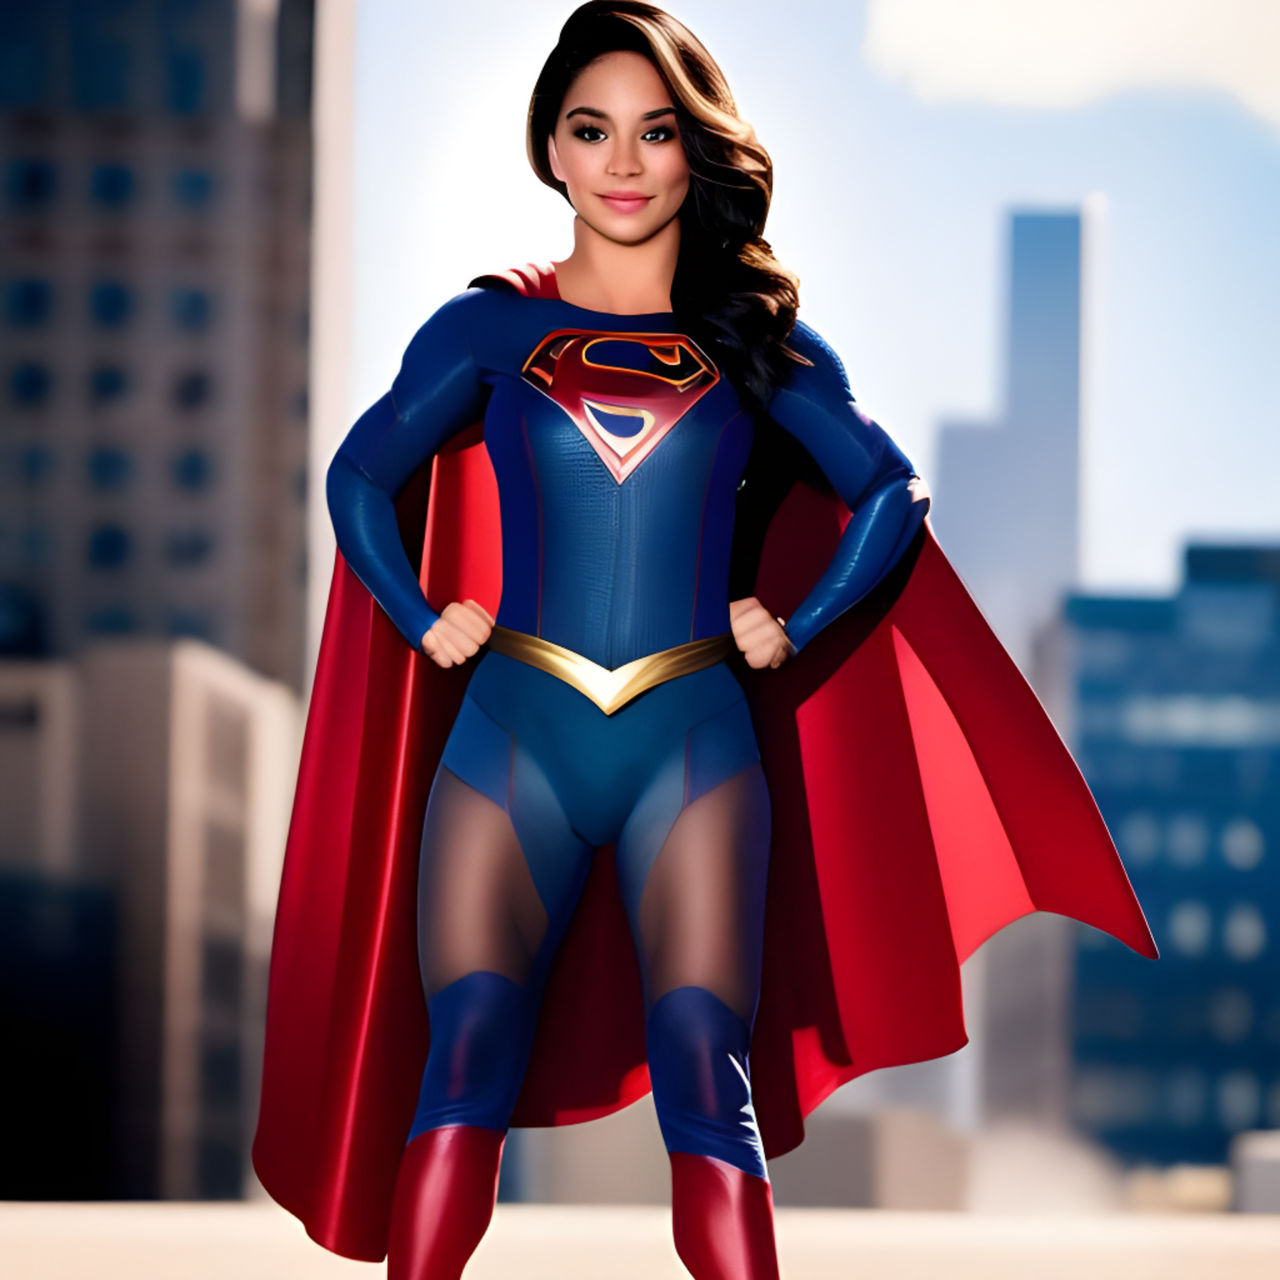 VH Supergirl 7 by Digital-Cosplay on DeviantArt